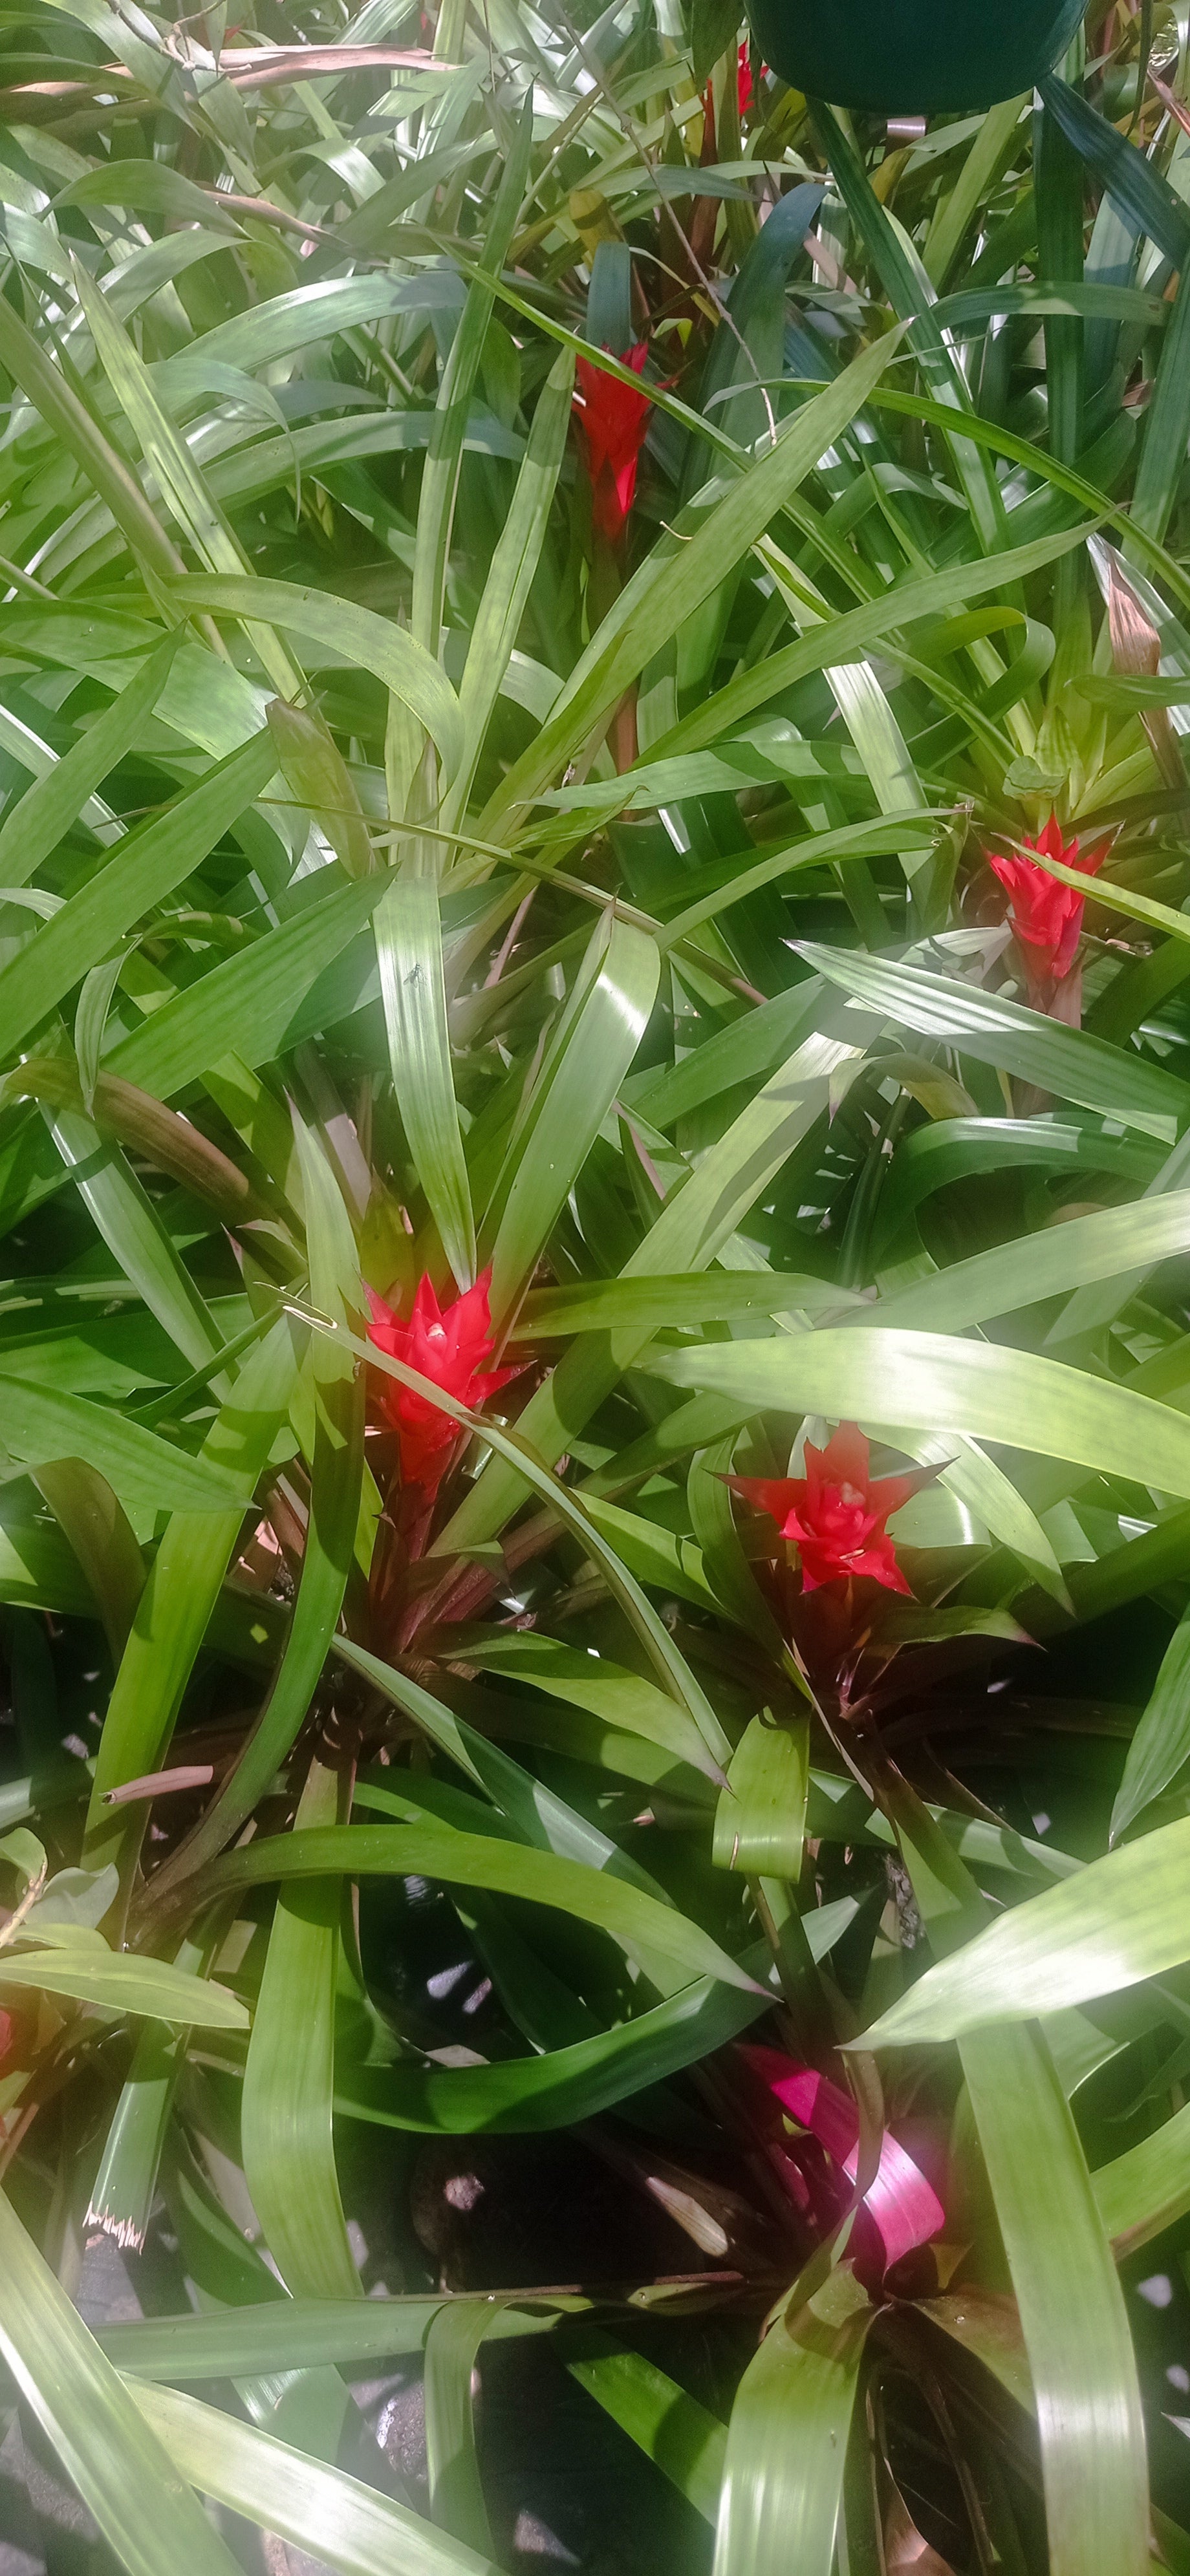 Bromeliad guzmania mini red